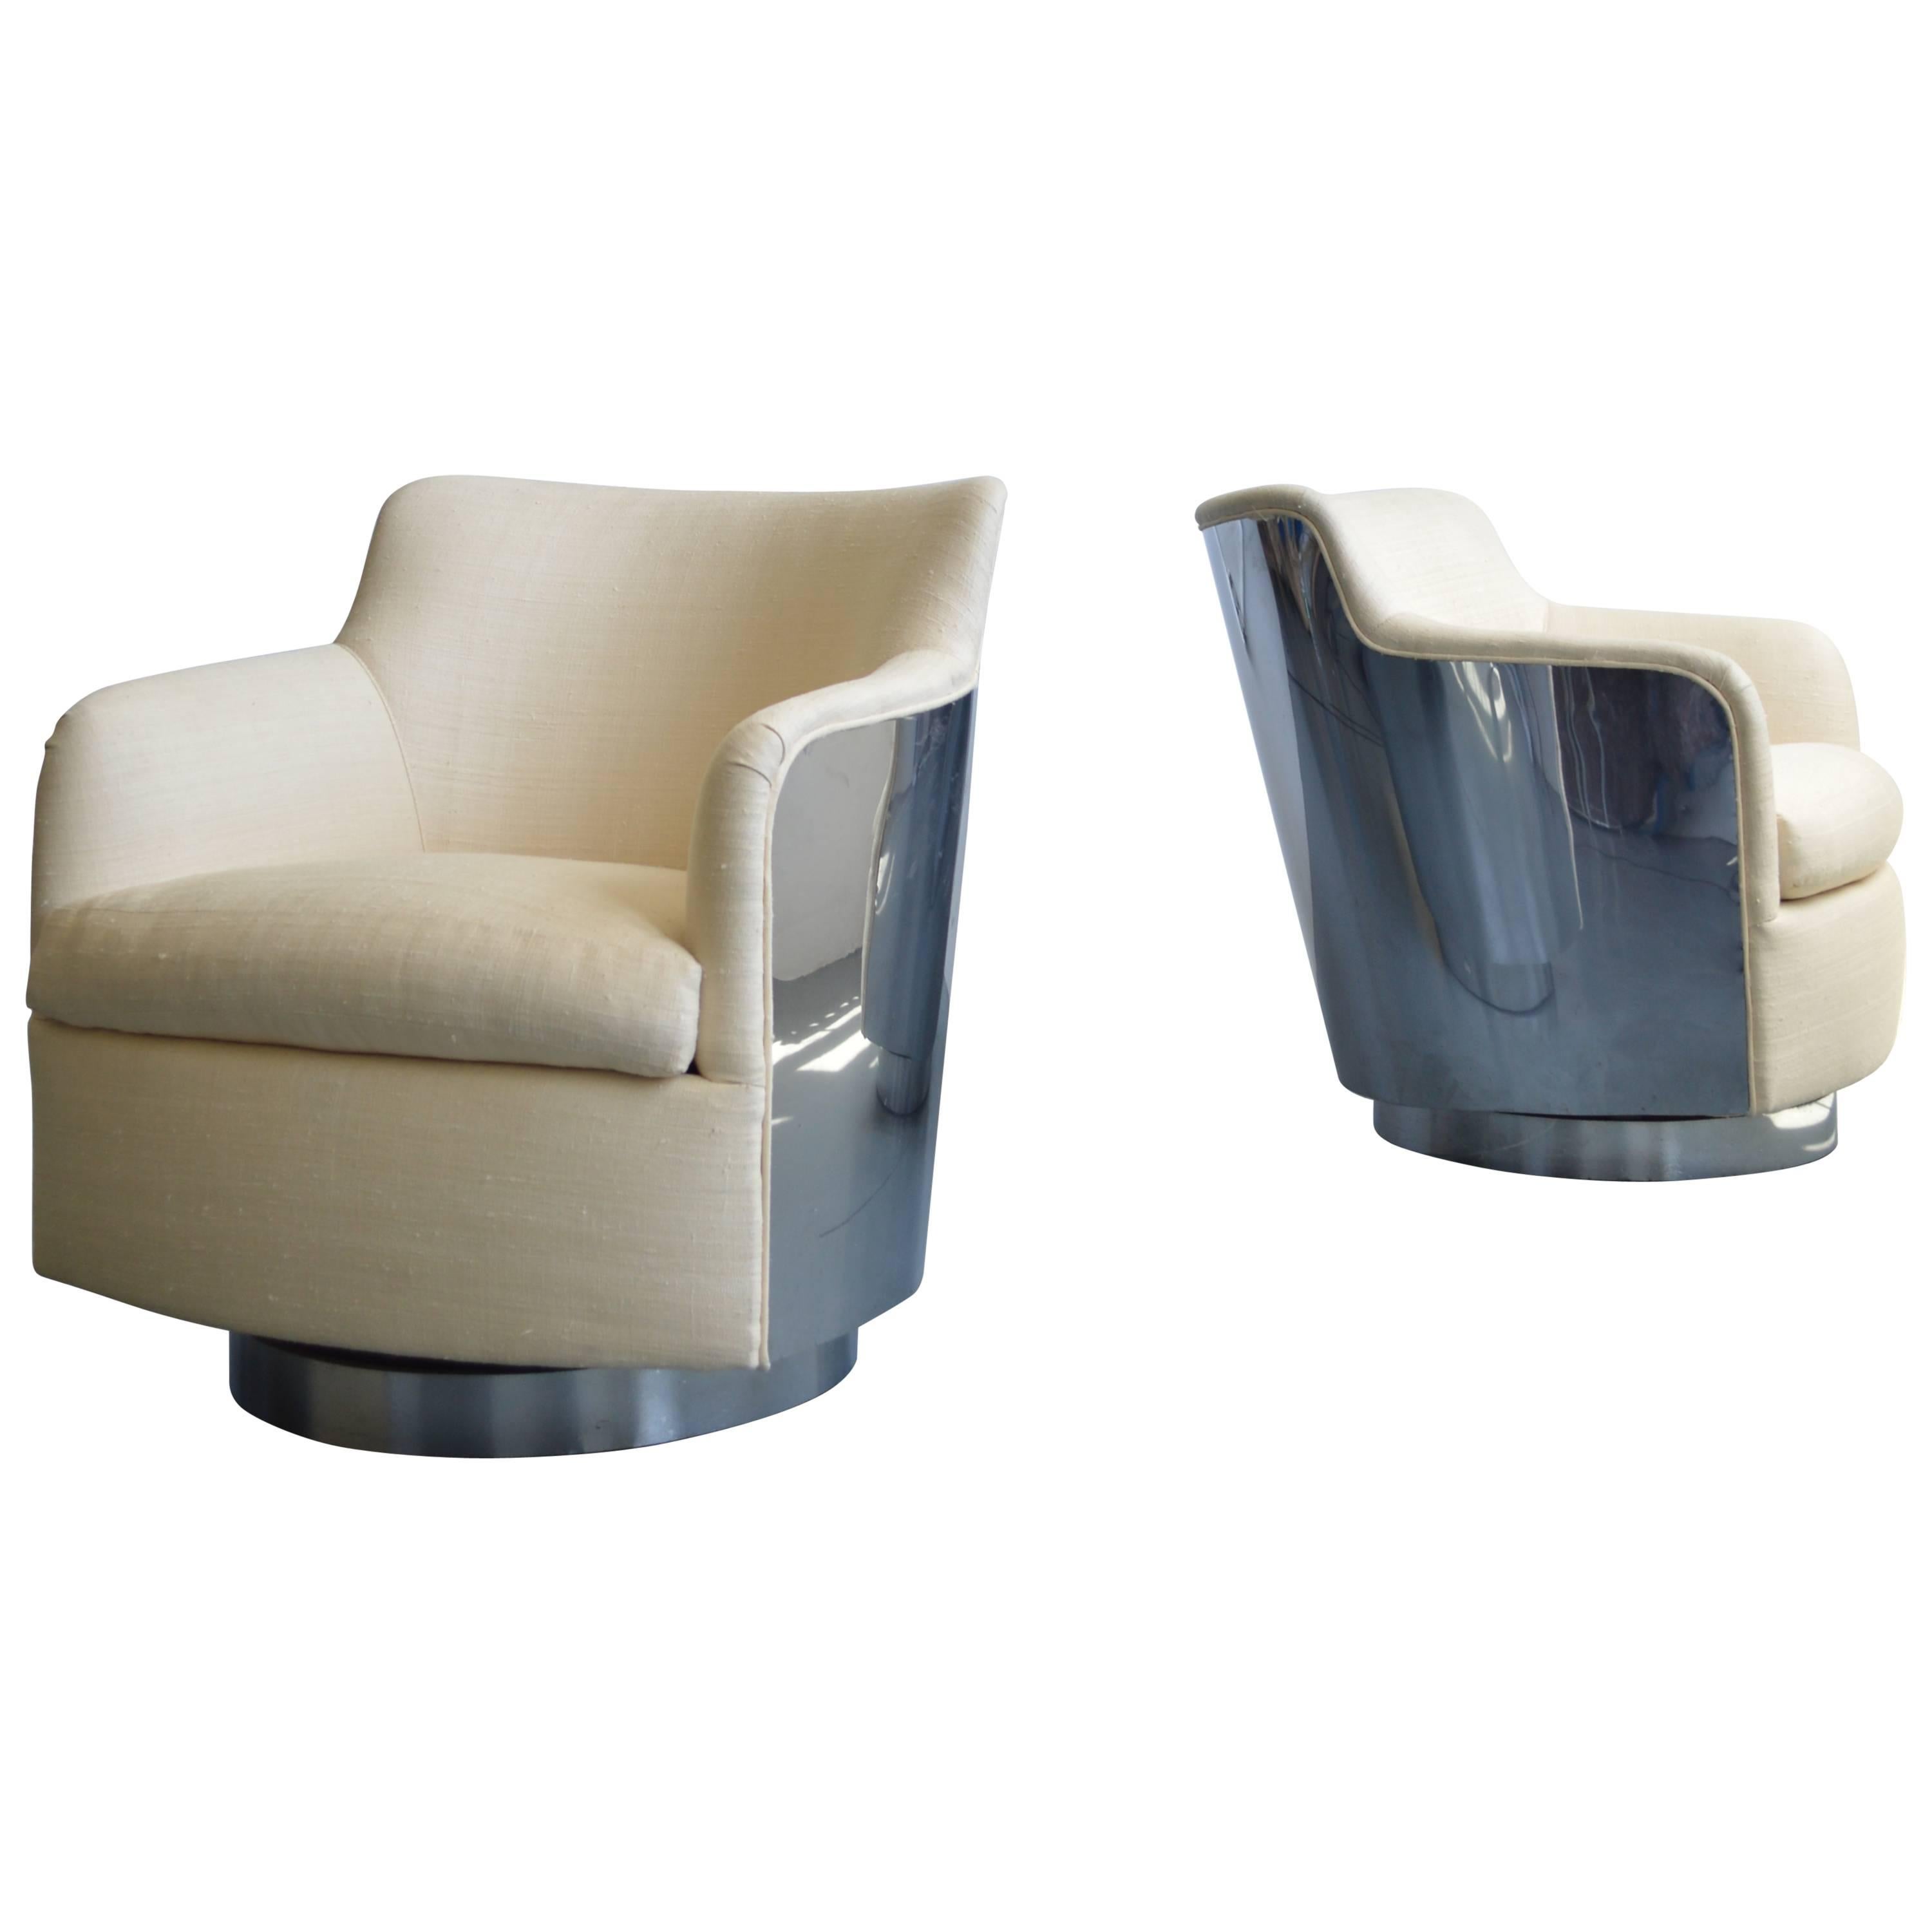 Set of Two Milo Baughman Swivel Base Lounge Chairs